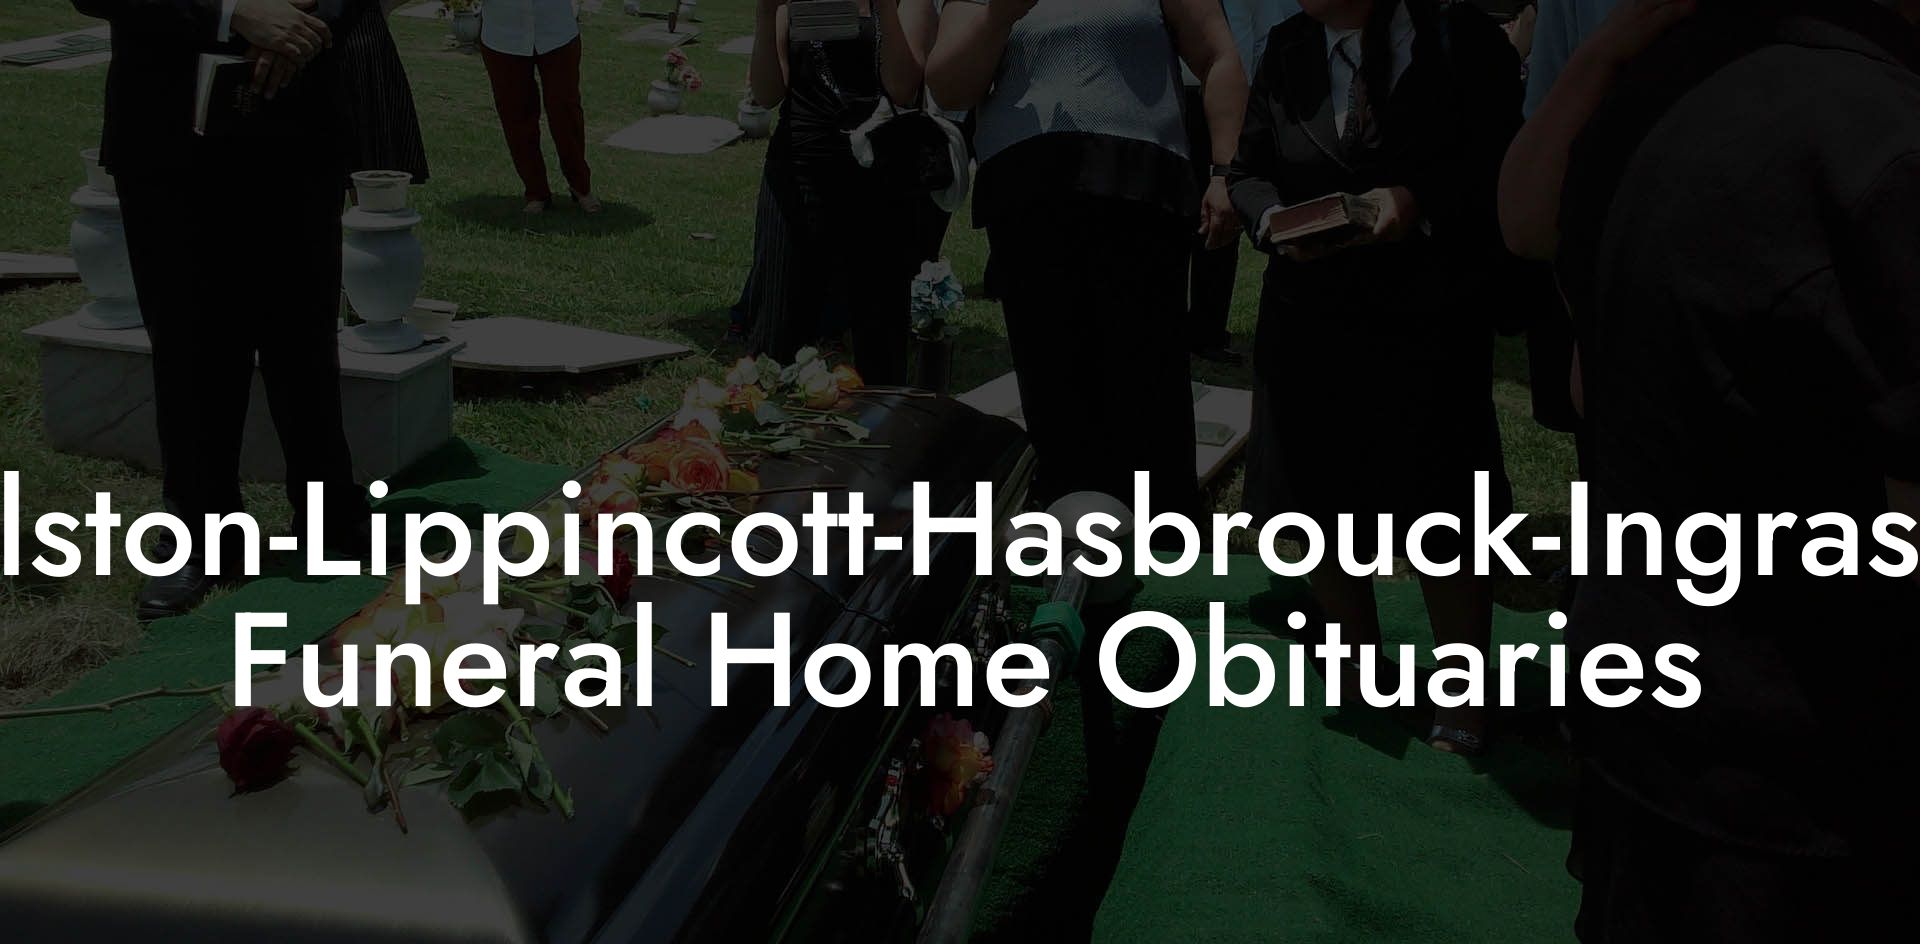 Ralston-Lippincott-Hasbrouck-Ingrassia Funeral Home Obituaries